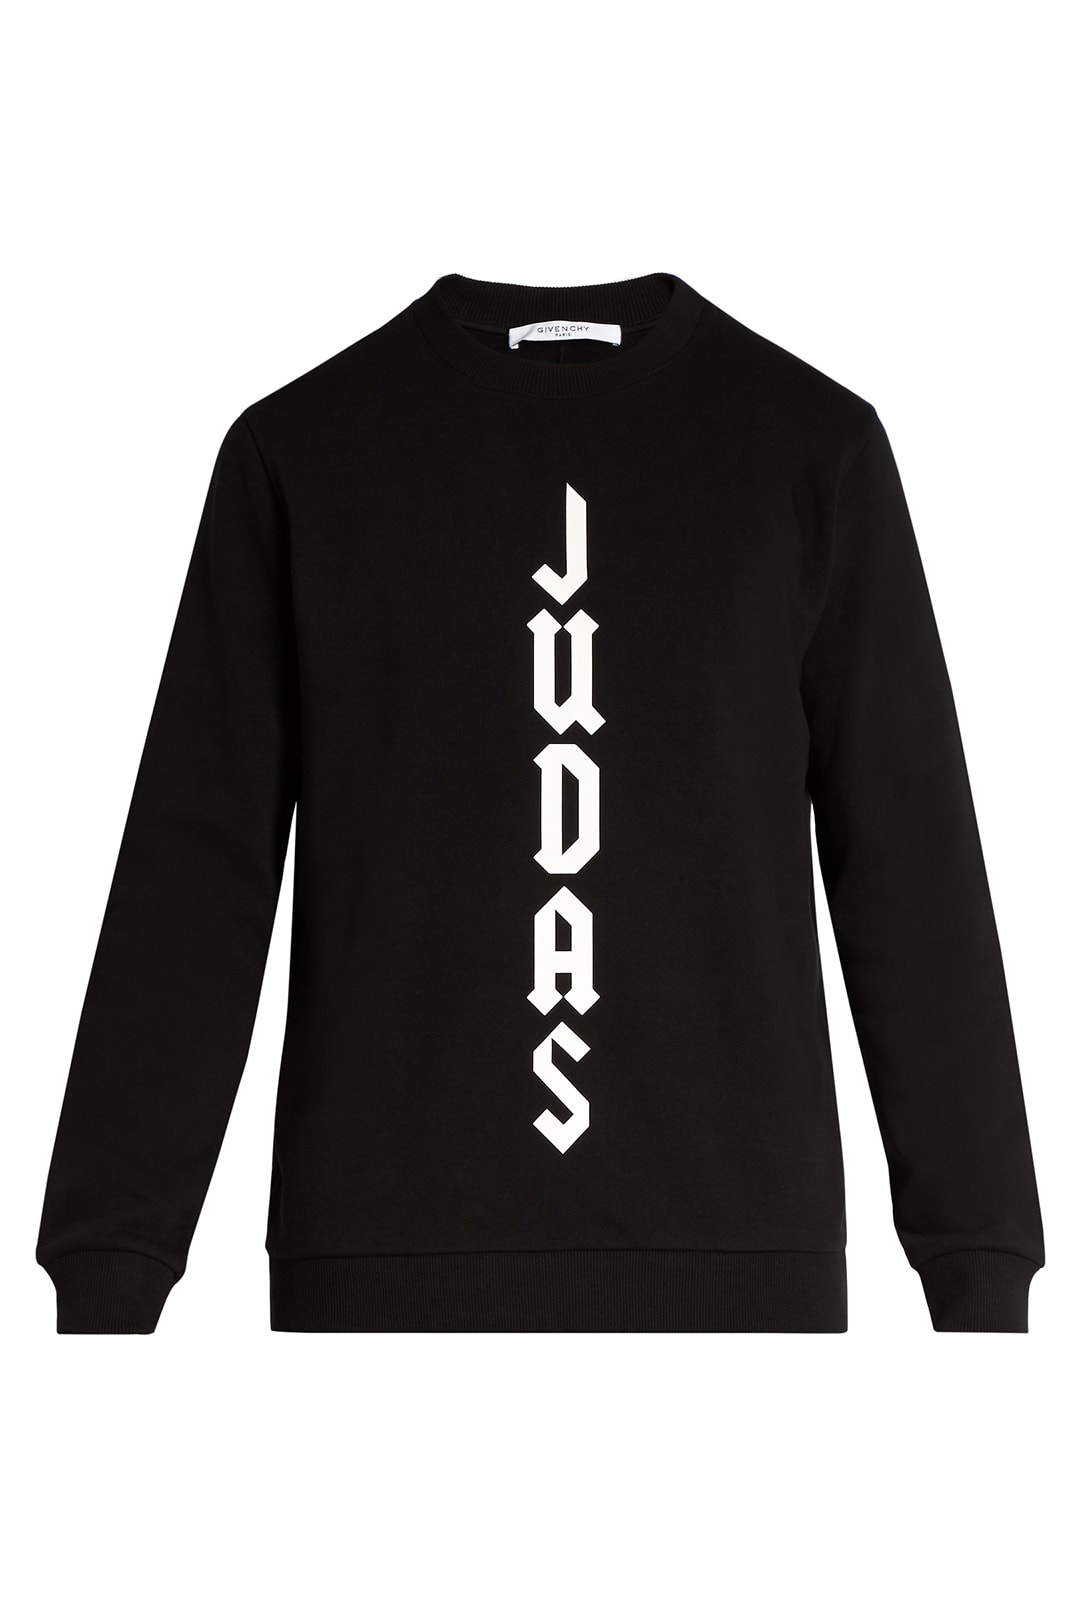 Givenchy 2017 Spring Summer Judas Sweatshirt Matches Fashion